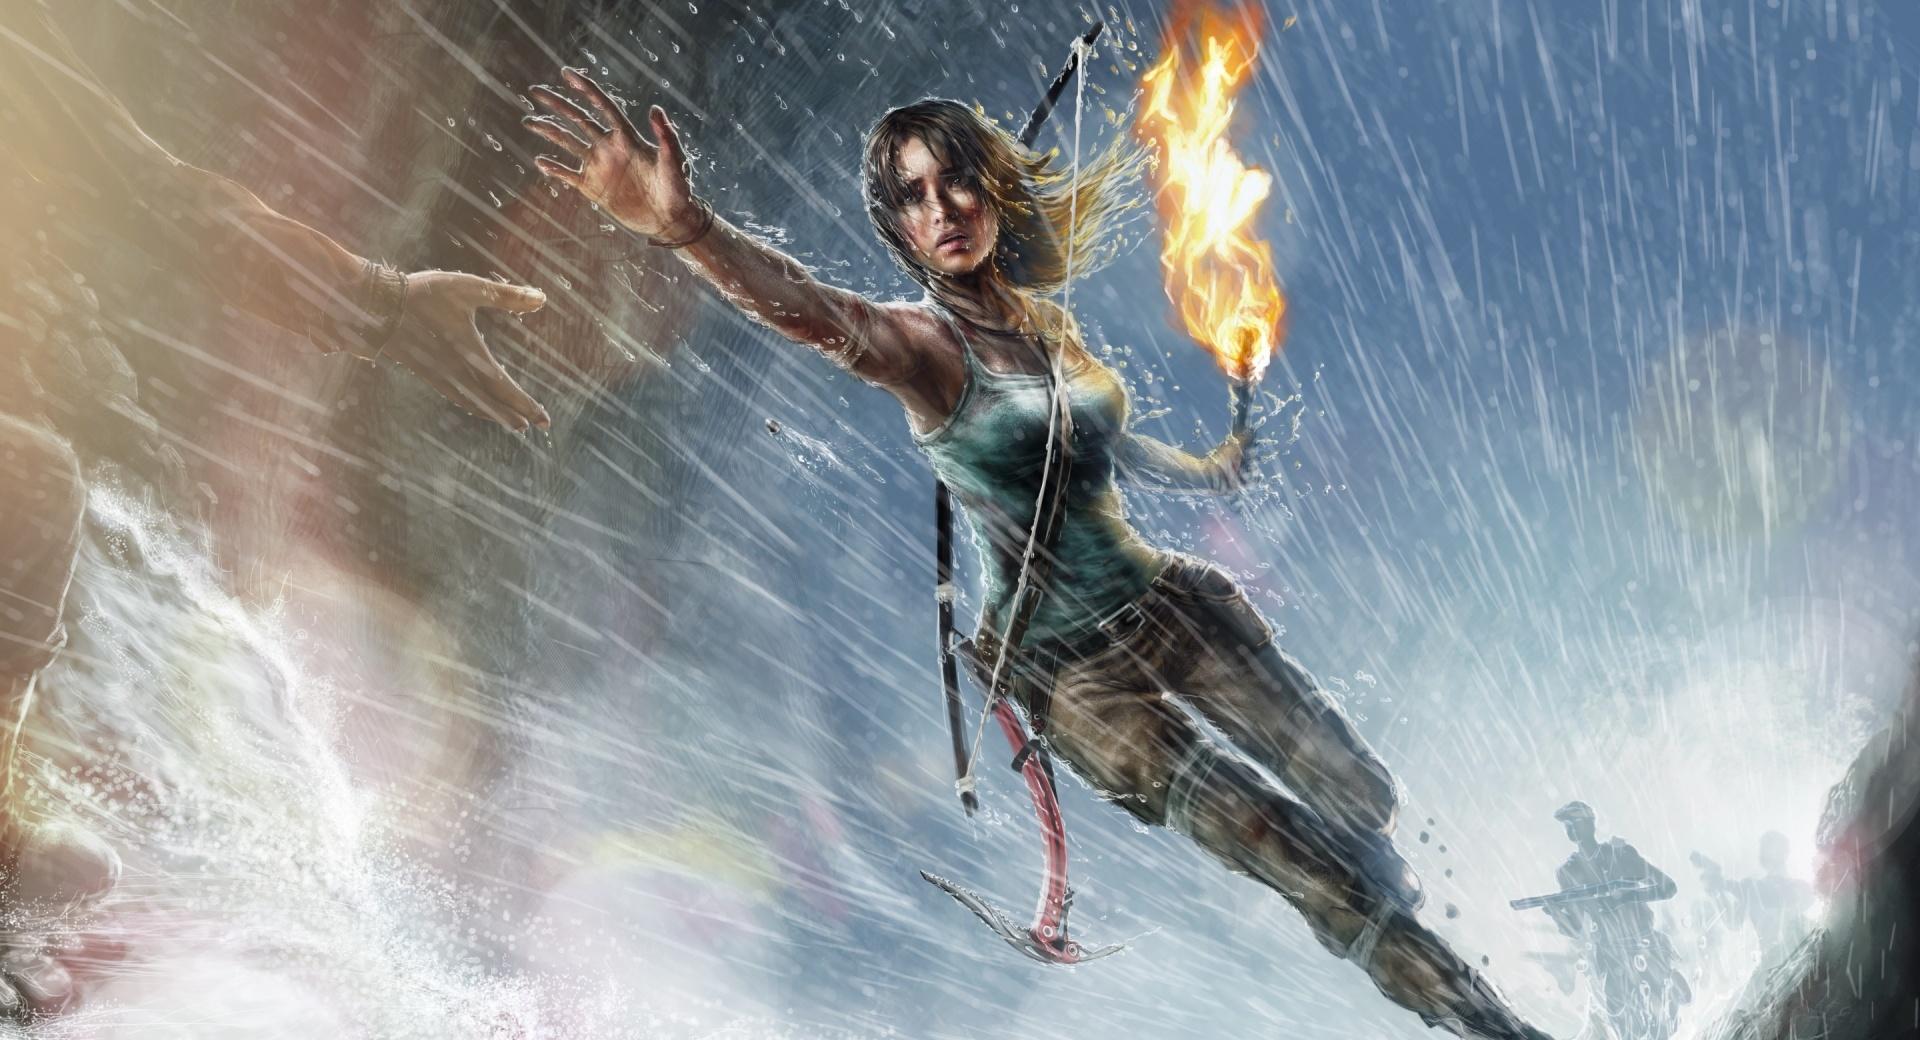 Lara Croft Game Rain at 1280 x 960 size wallpapers HD quality